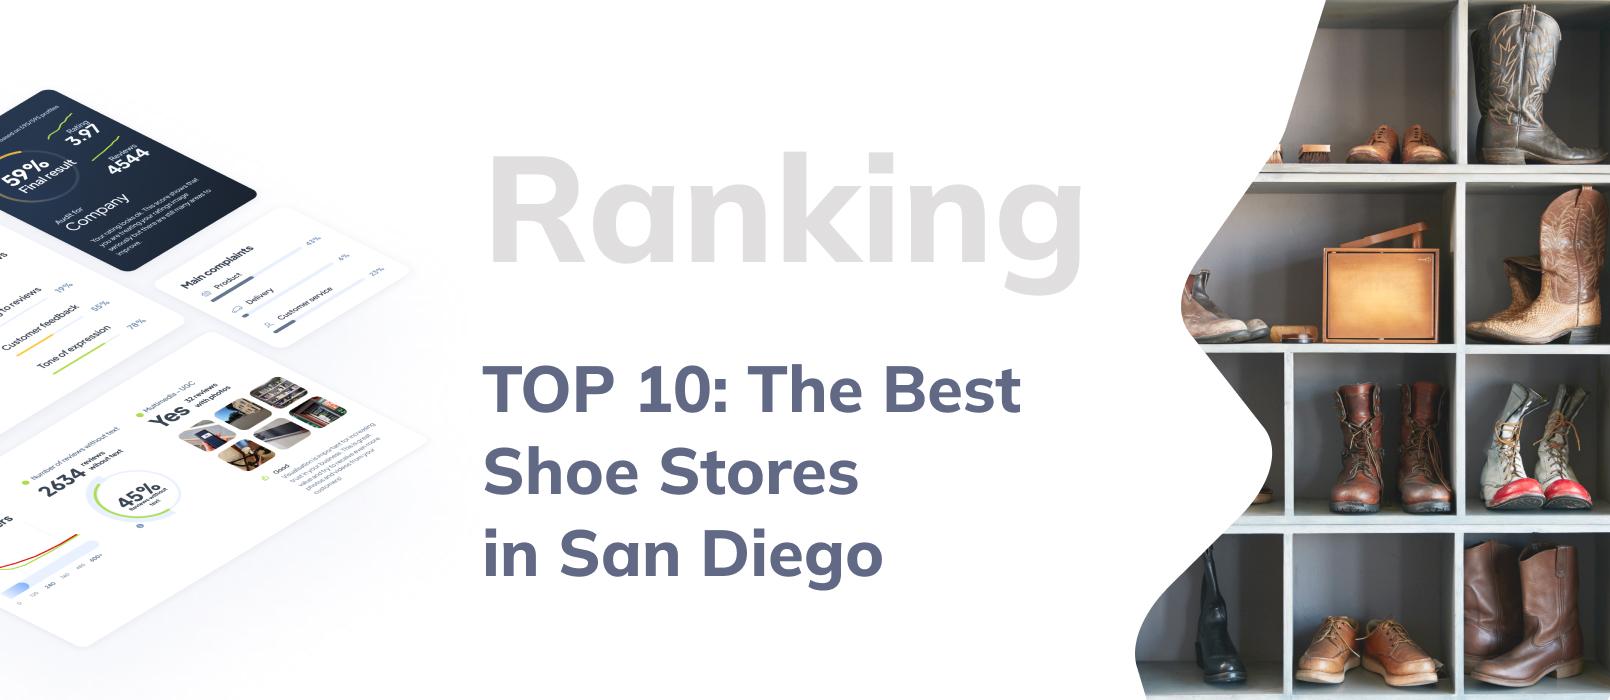 Best shoe stores in San Diego – TOP 10 ranking